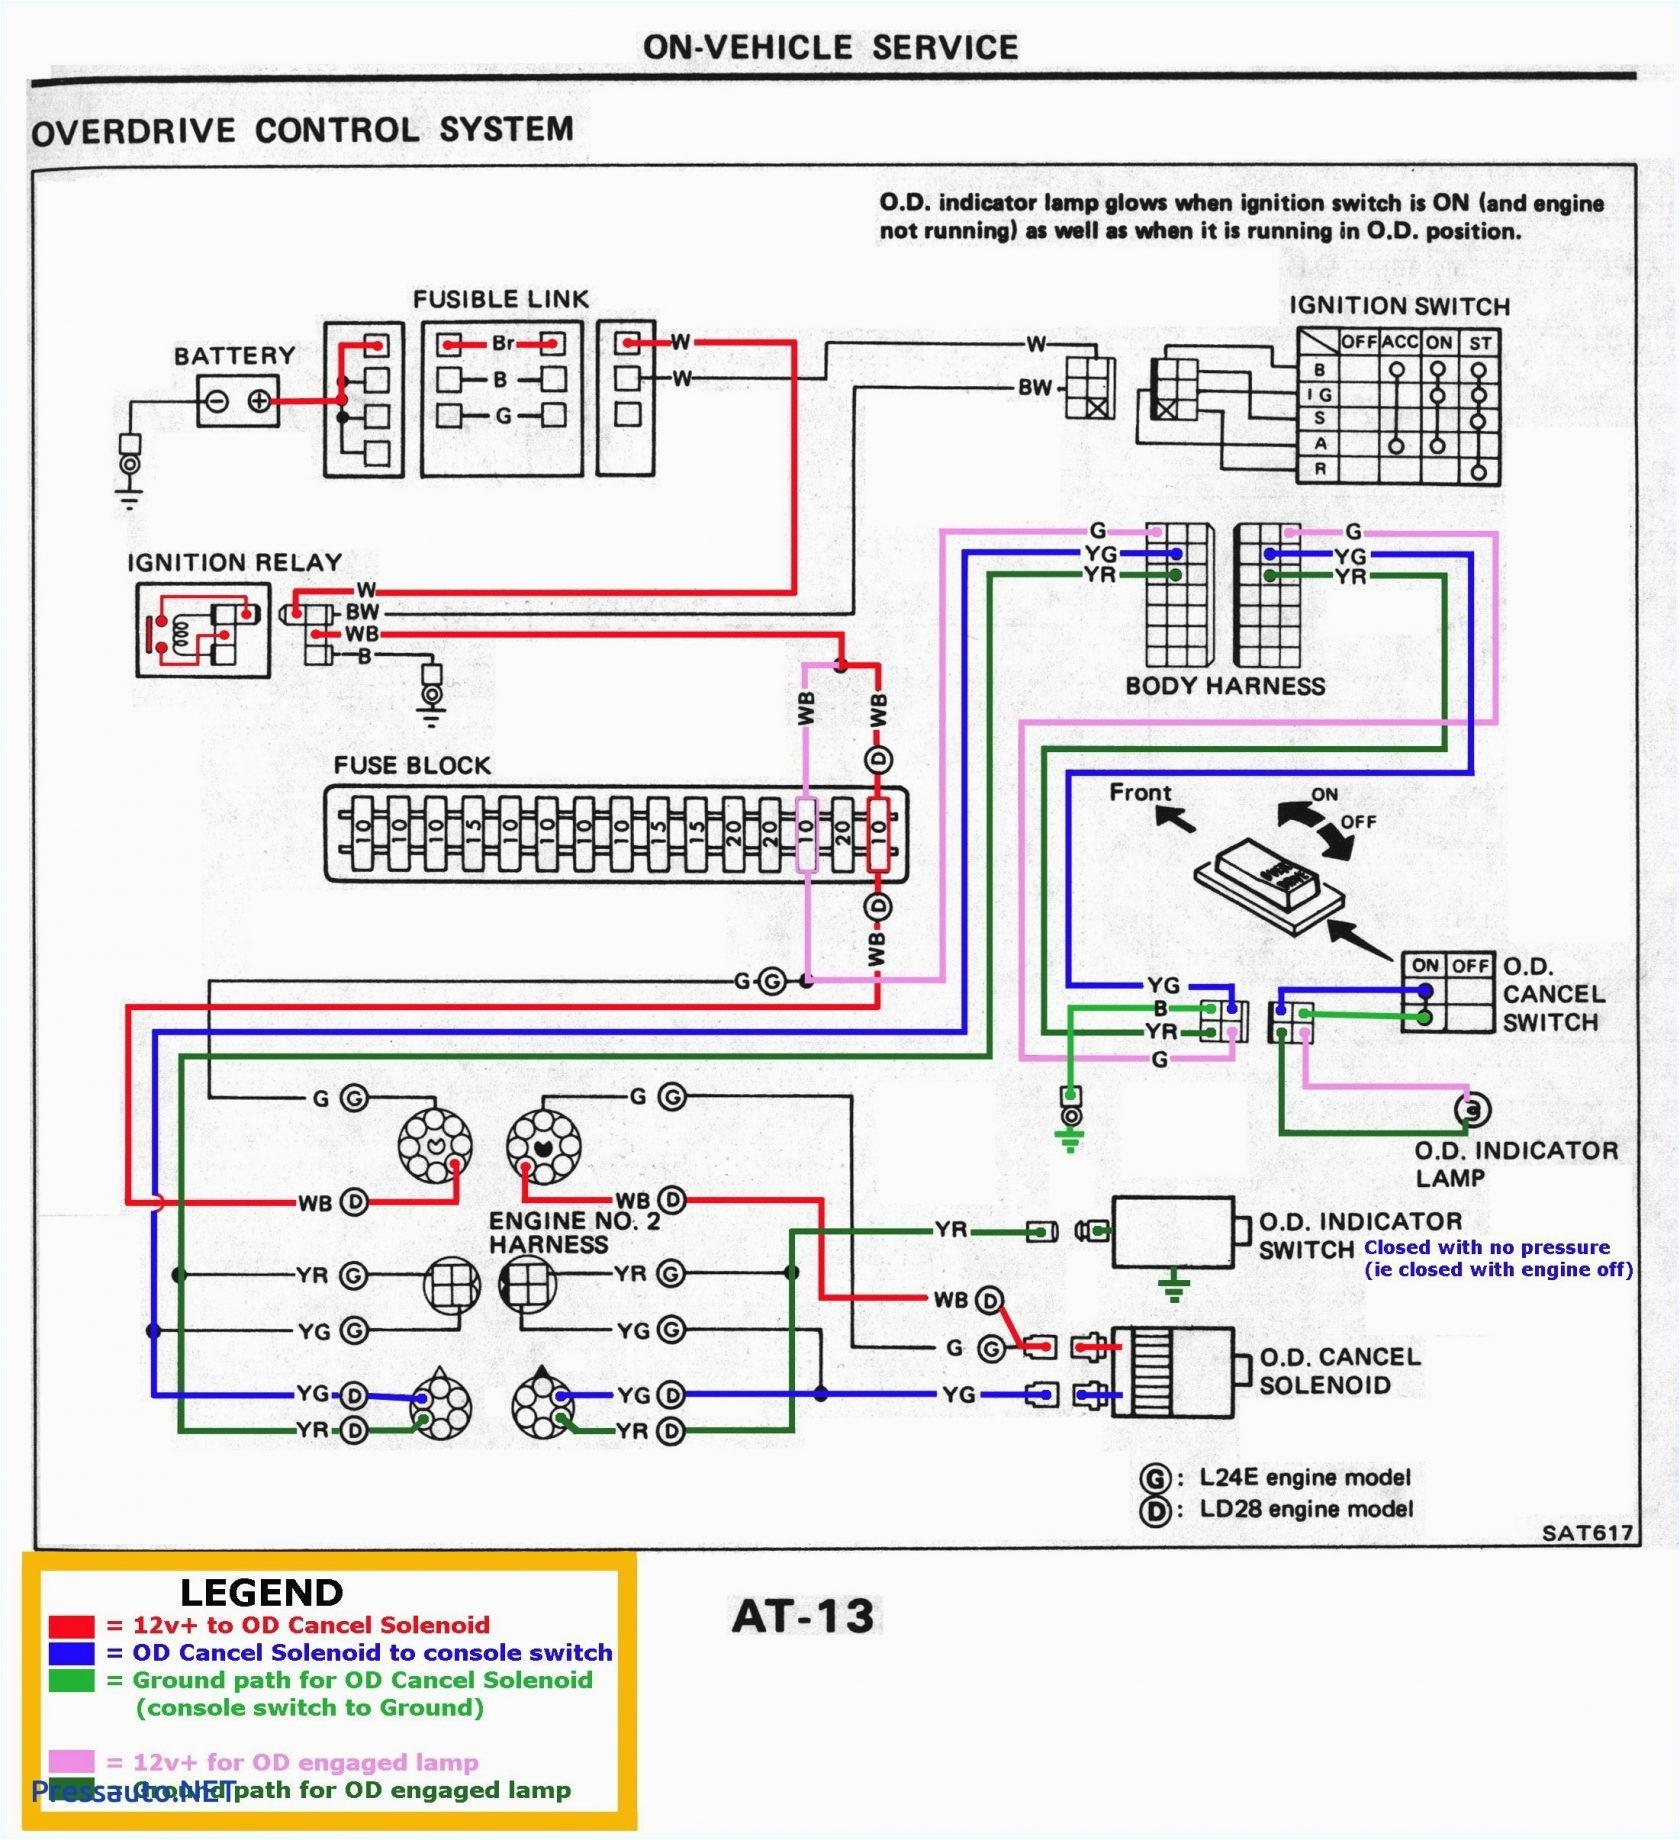 Mercedes Benz Radio Wiring Diagram Alfa Romeo Stereo Wiring Diagram Wiring Diagram Blog